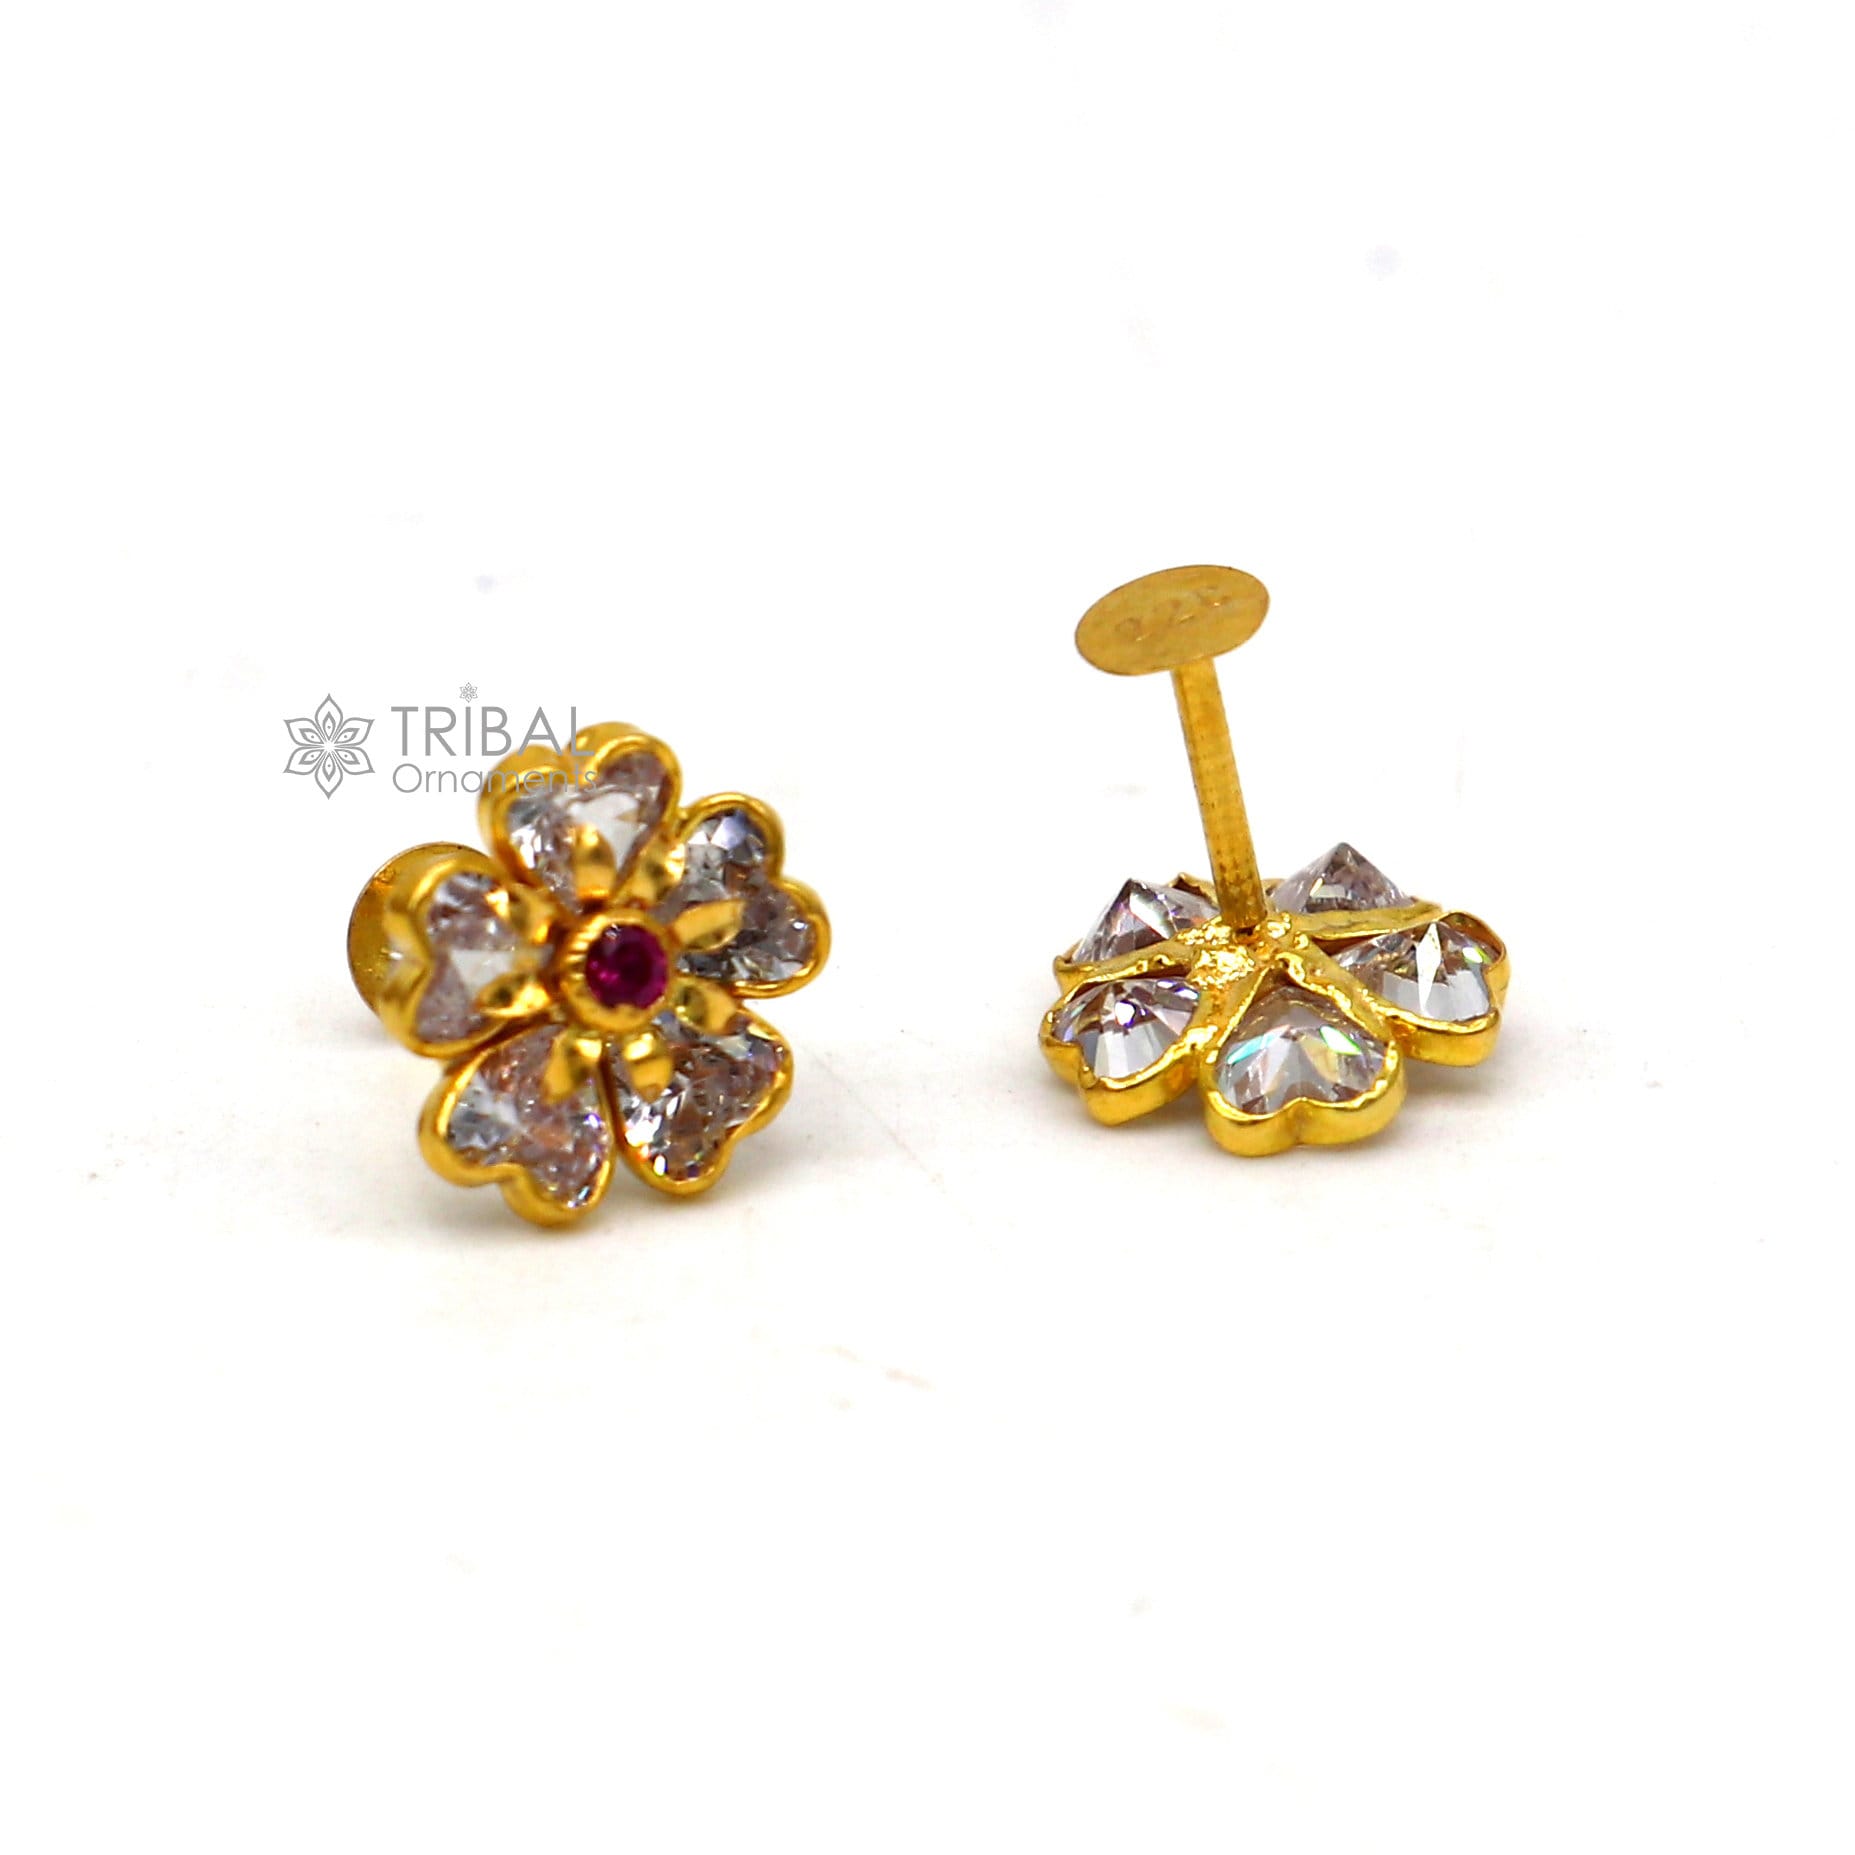 14kt yellow gold handmade fabulous orange Stone excellent vintage flower design stud earrings pair unisex jewelry er178 - TRIBAL ORNAMENTS